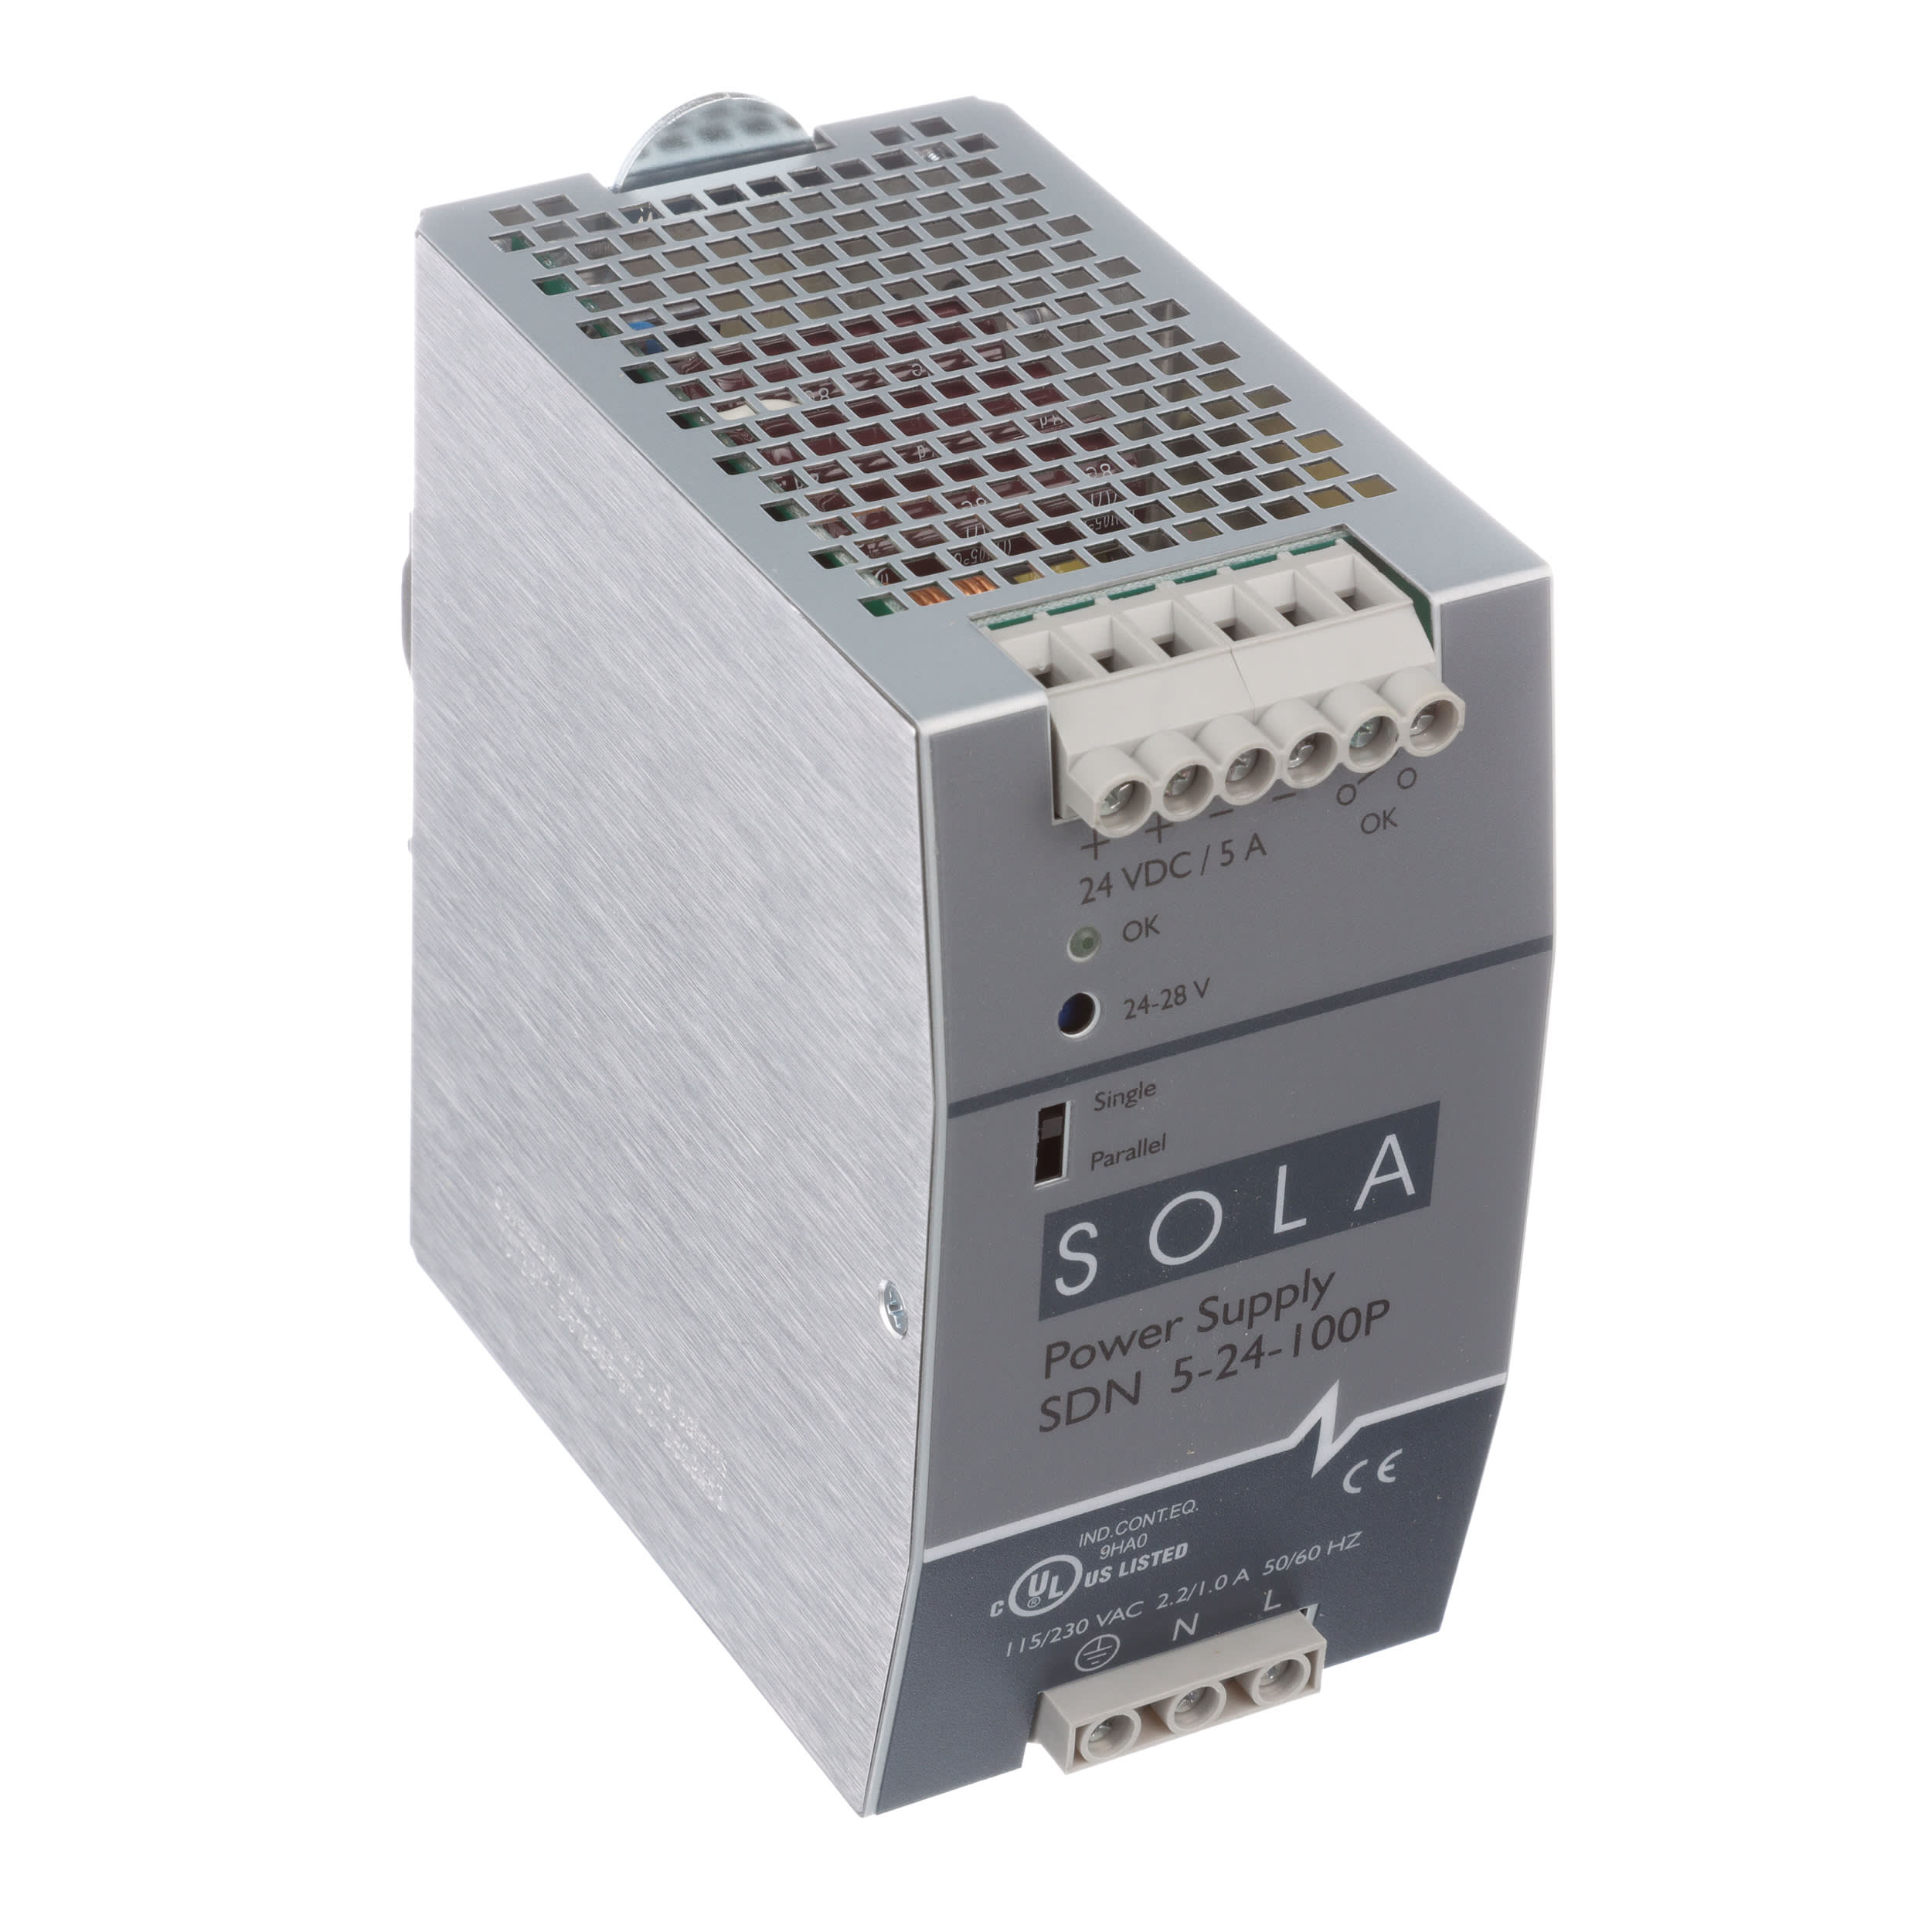 SOLA Power Supply SDN 5-24-100P 115/230VAC 2.2/1.0A 50/60Hz 42736ISU 